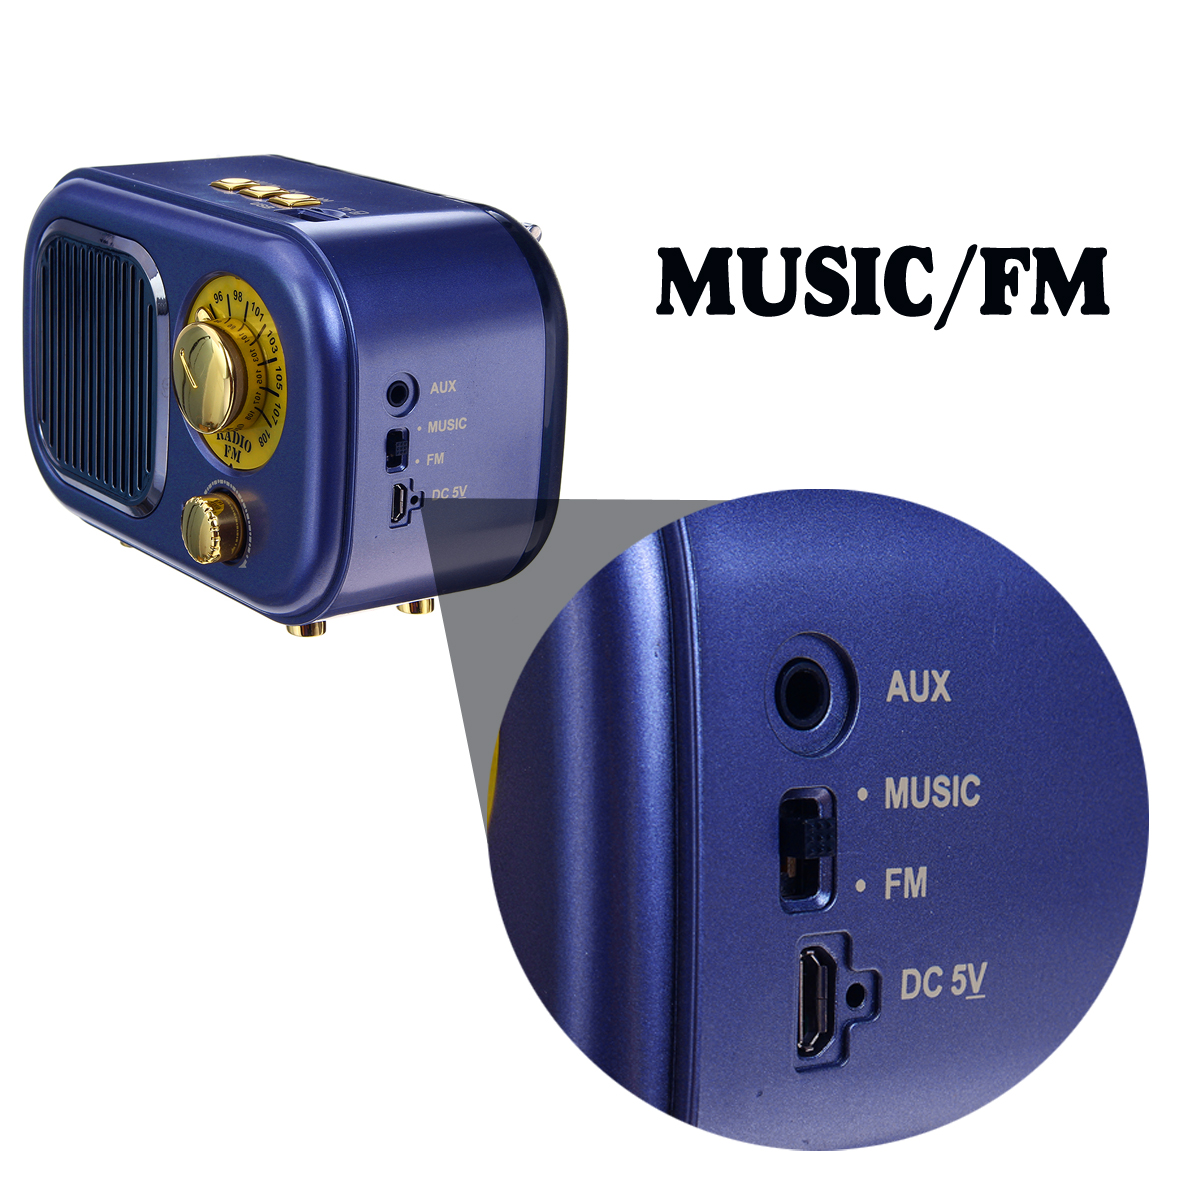 M-205BT-Portable-Retro-Radio-bluetooth-Speaker-MP3-Player-FM-Raido-TF-Card-U-Disk-AUX-Mini-Raido-Spe-1652934-4